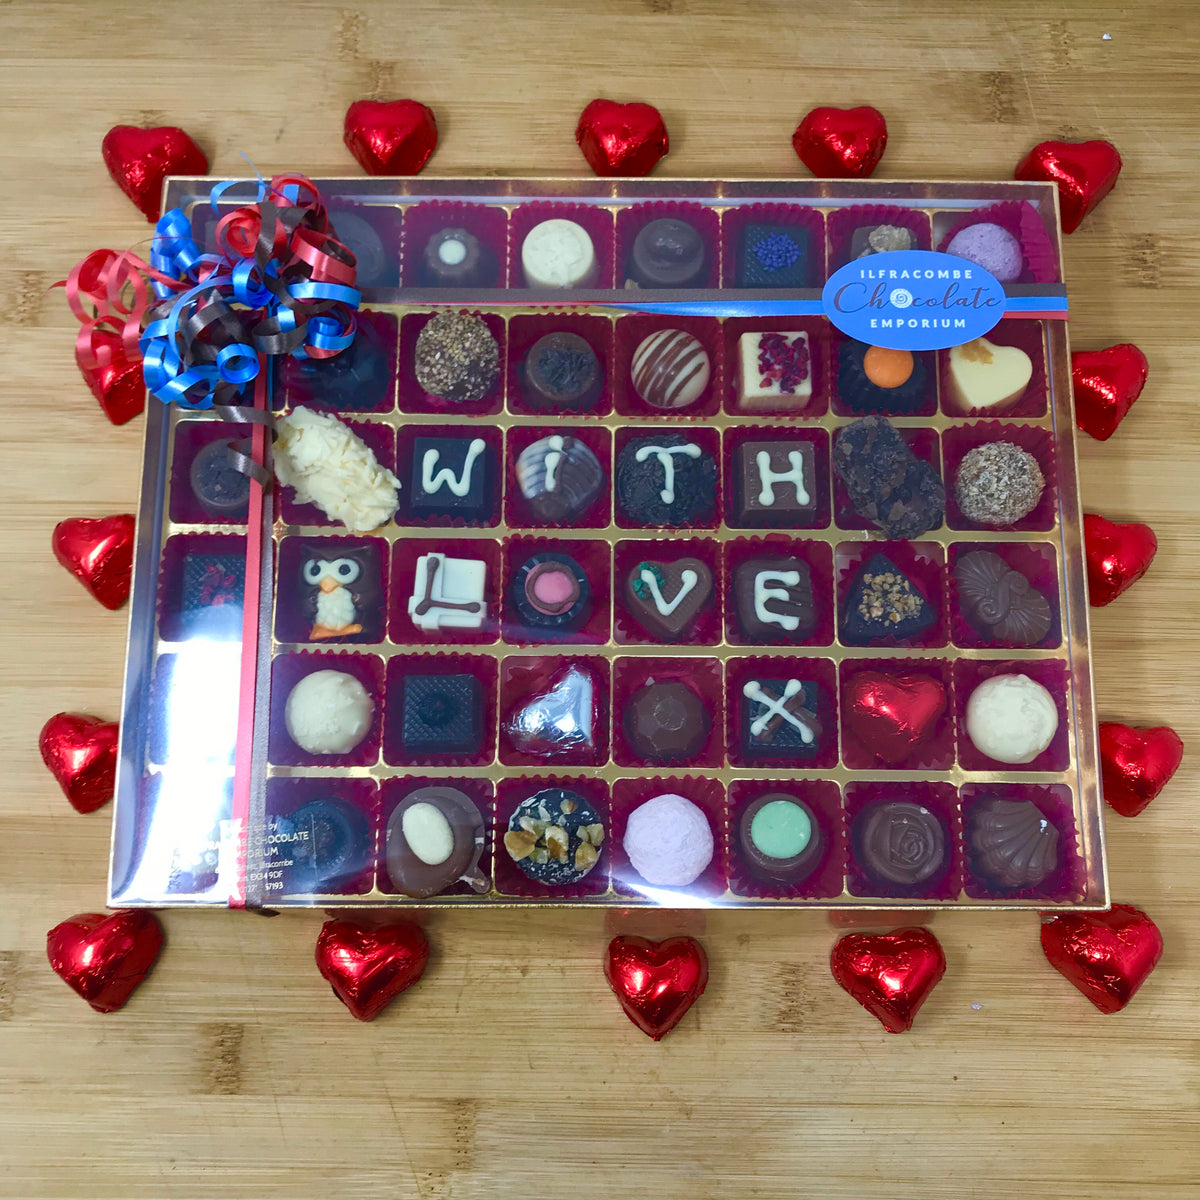 Chocolate Box with 48 Handmade Chocolates - Extra Large Size – Ilfracombe  Chocolate Emporium Ltd.